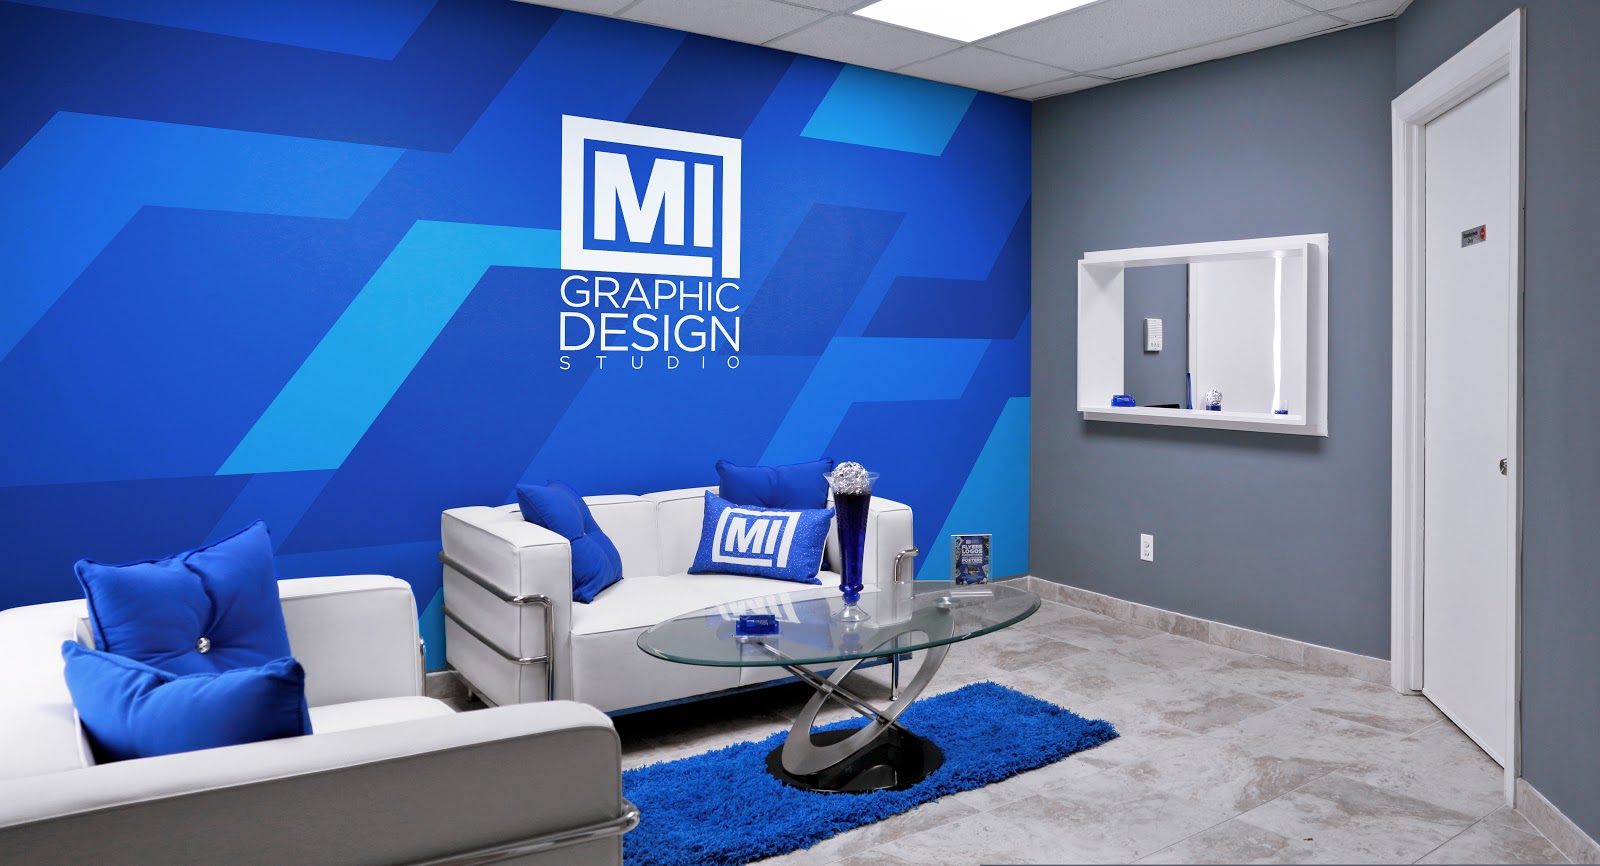 Photo of MI Graphic Design Studio, LLC in Elizabeth City, New Jersey, United States - 1 Picture of Point of interest, Establishment, Finance